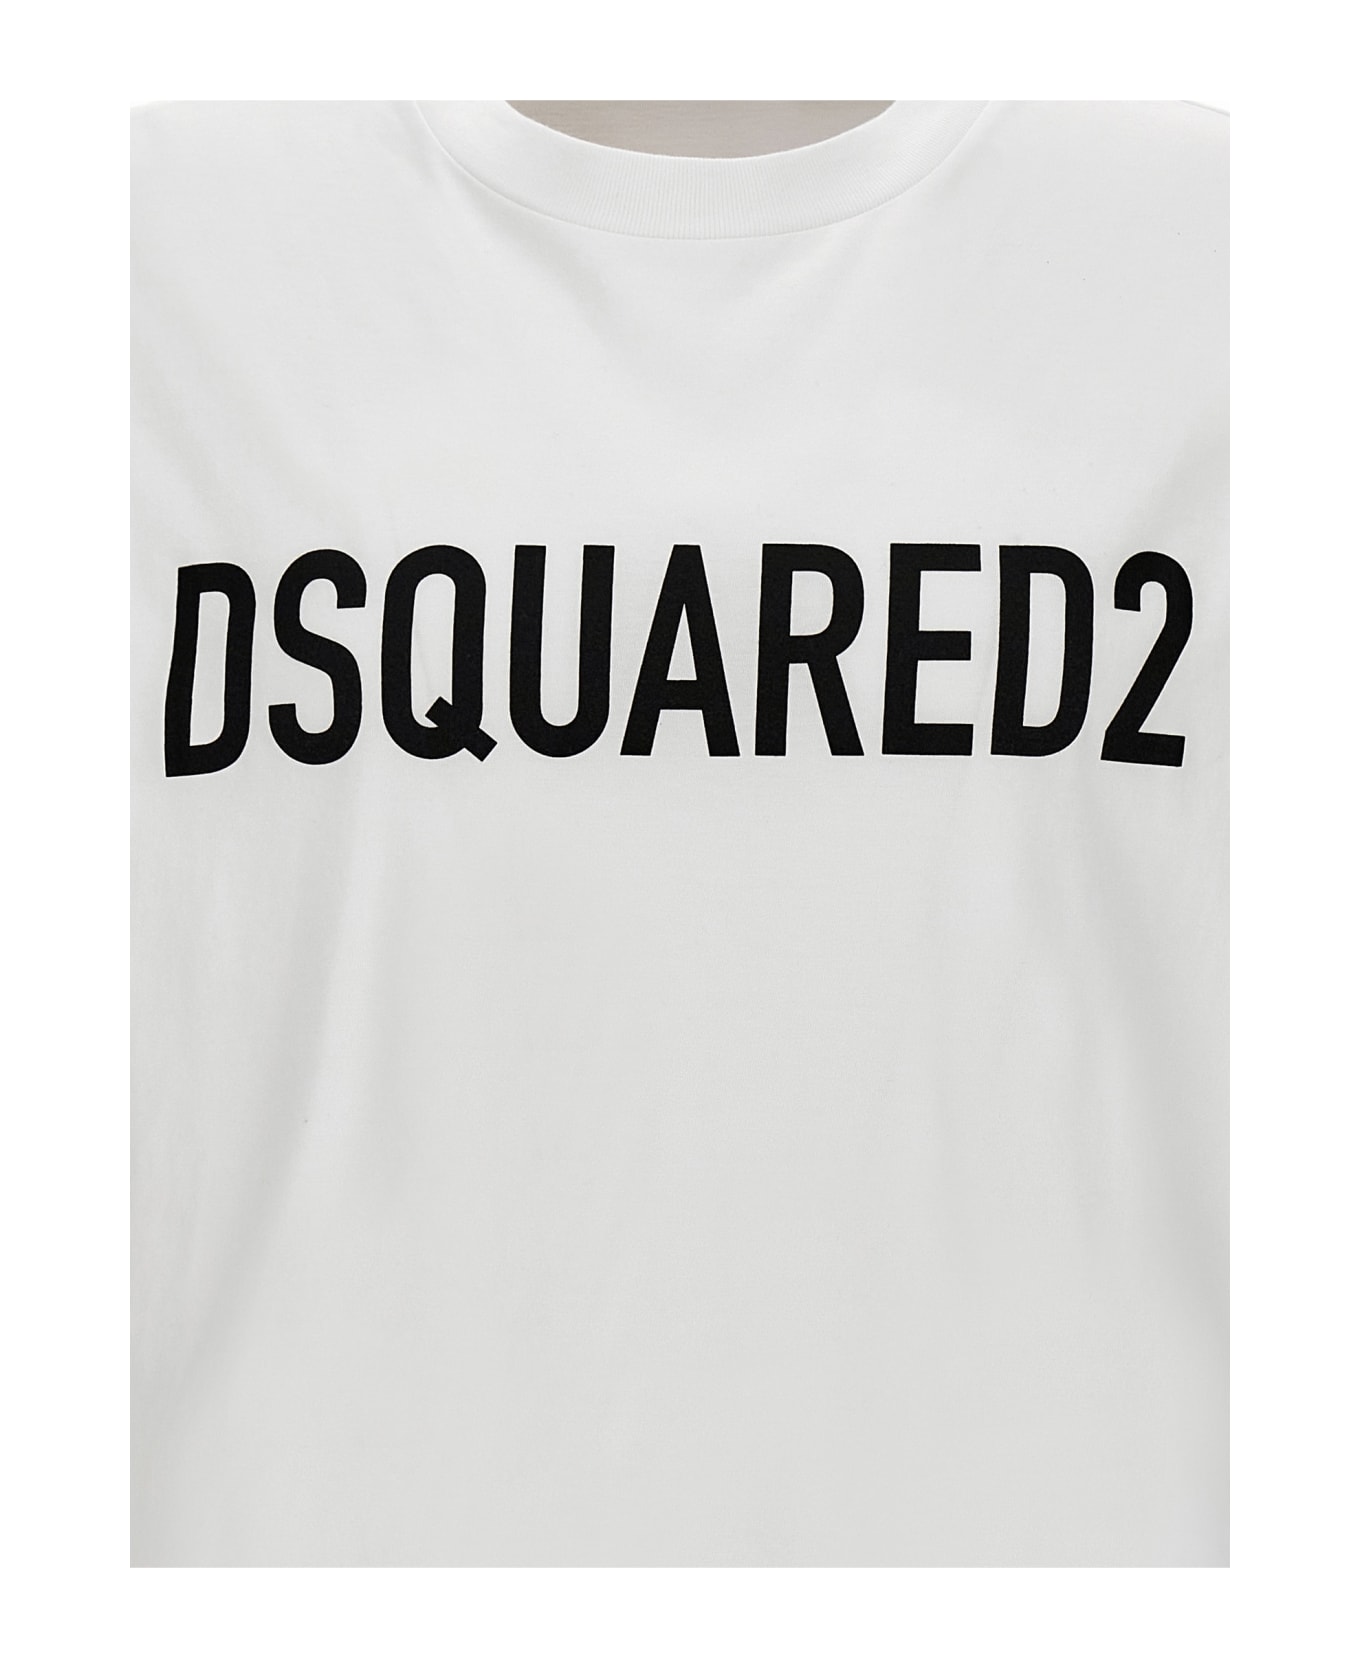 Dsquared2 Logo T-shirt - White/Black